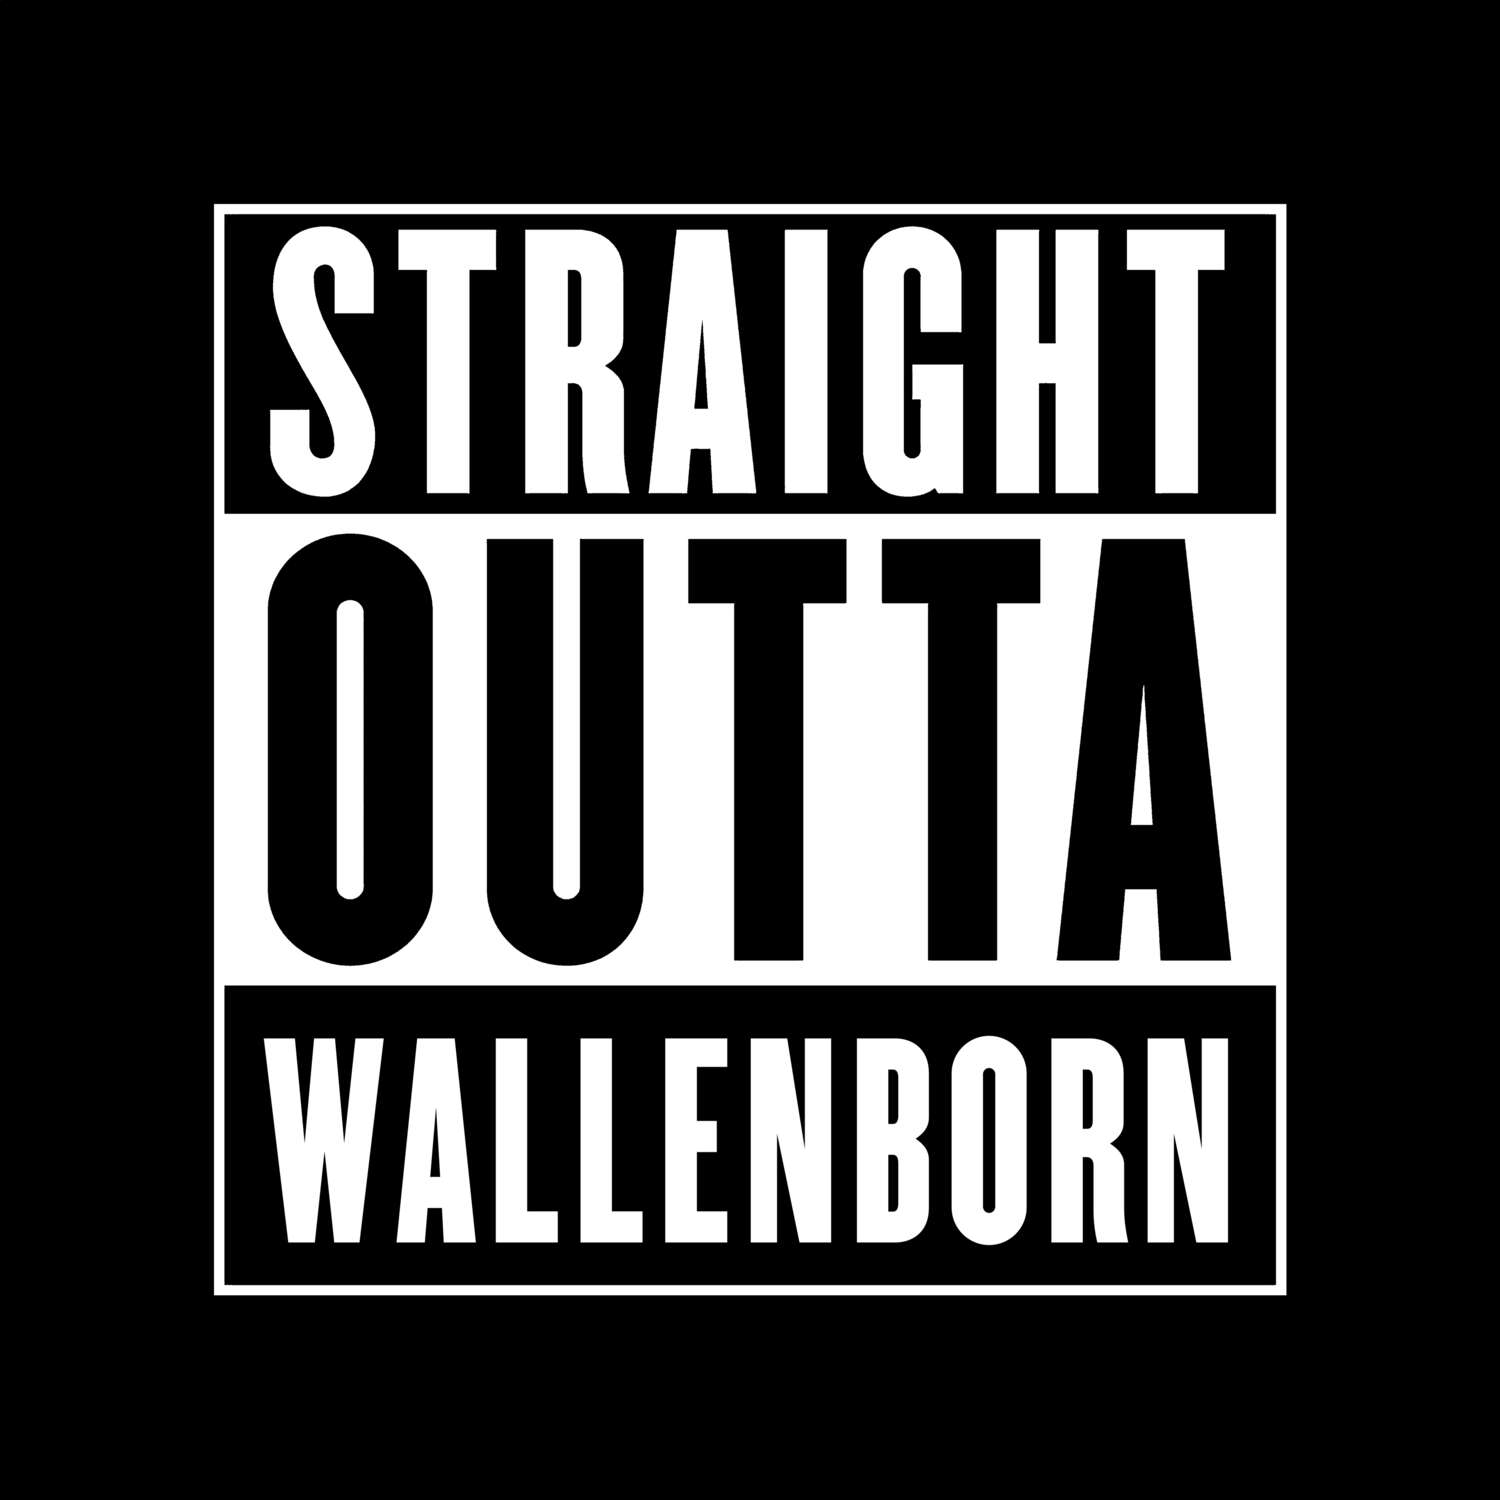 Wallenborn T-Shirt »Straight Outta«